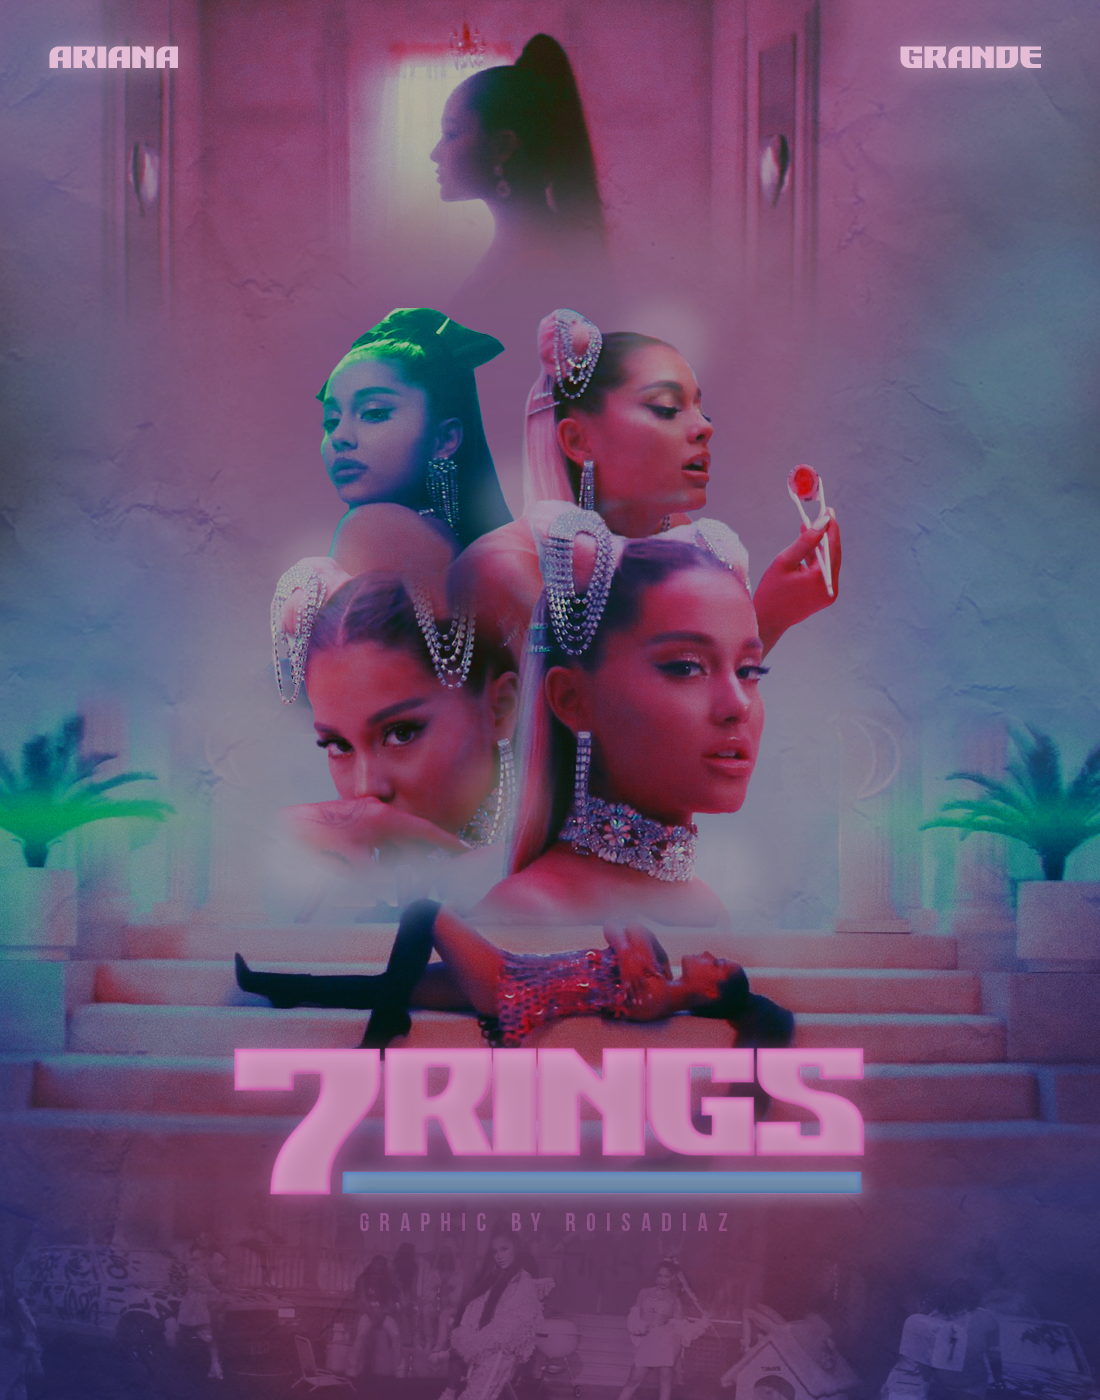 7 Rings - Ariana Grande by roisadiaz on DeviantArt